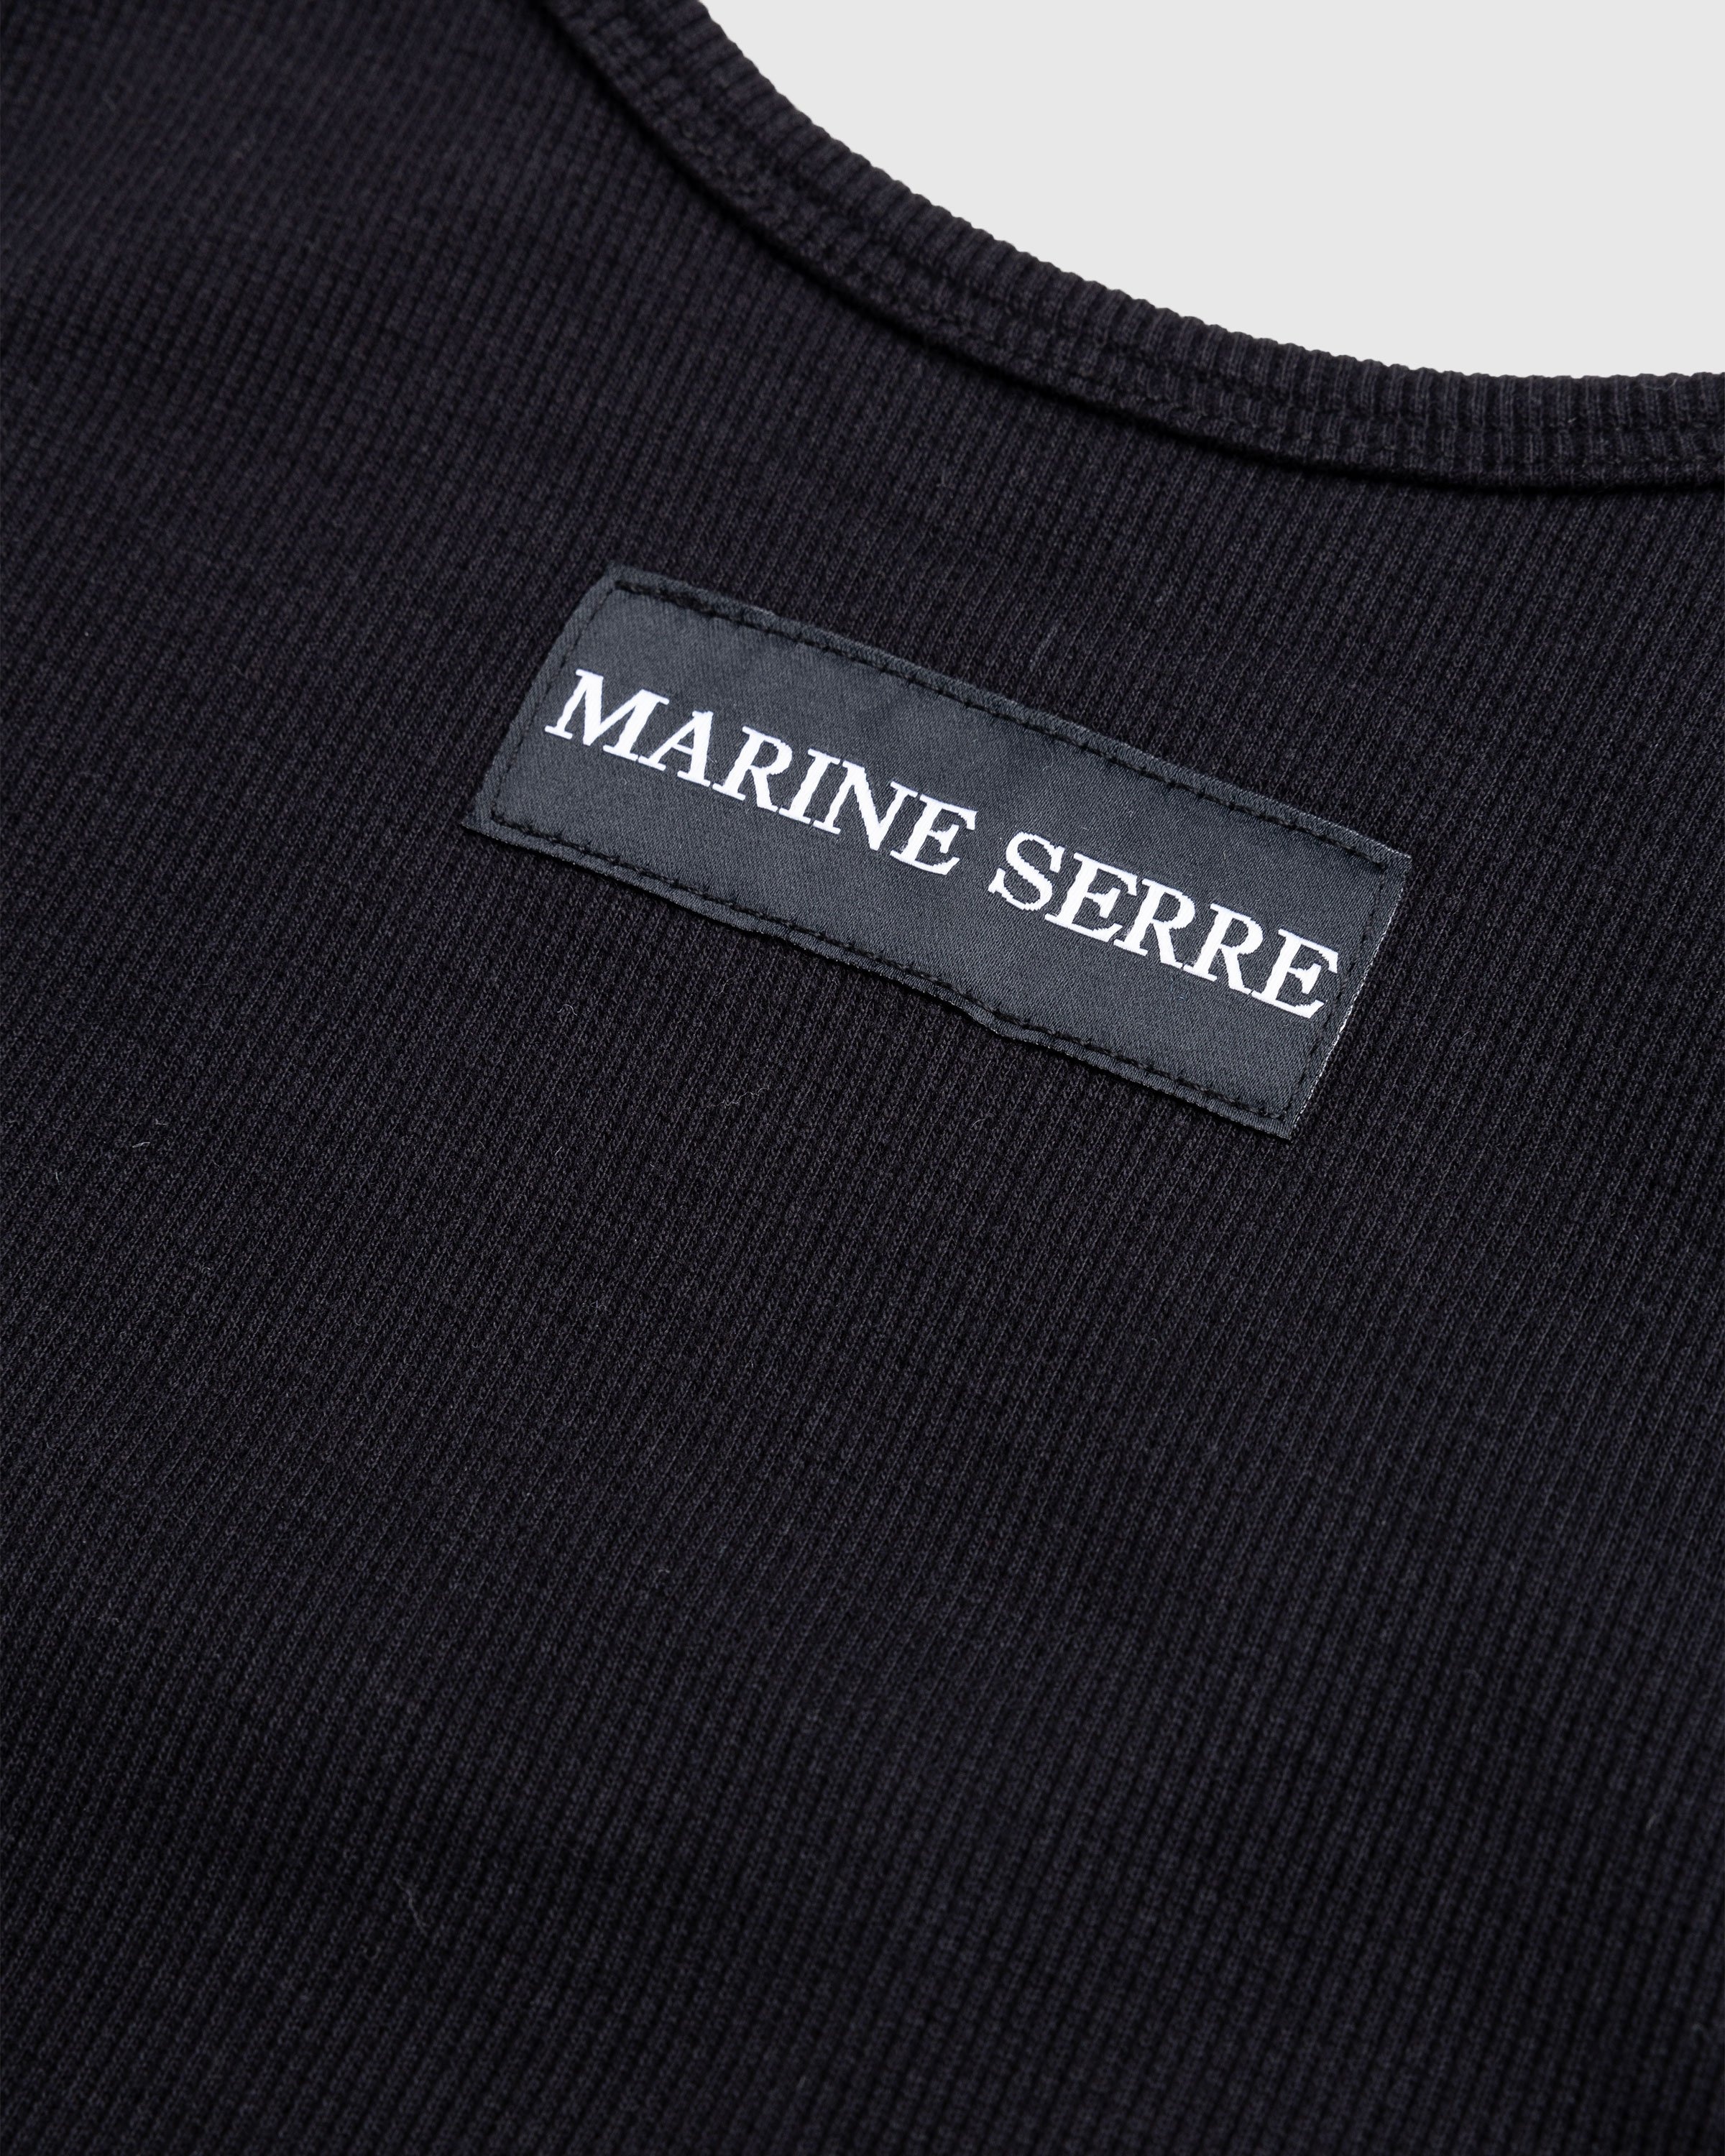 Marine Serre – Organic Cotton Fitted Tank Top Black - Men Tops - Black - Image 5